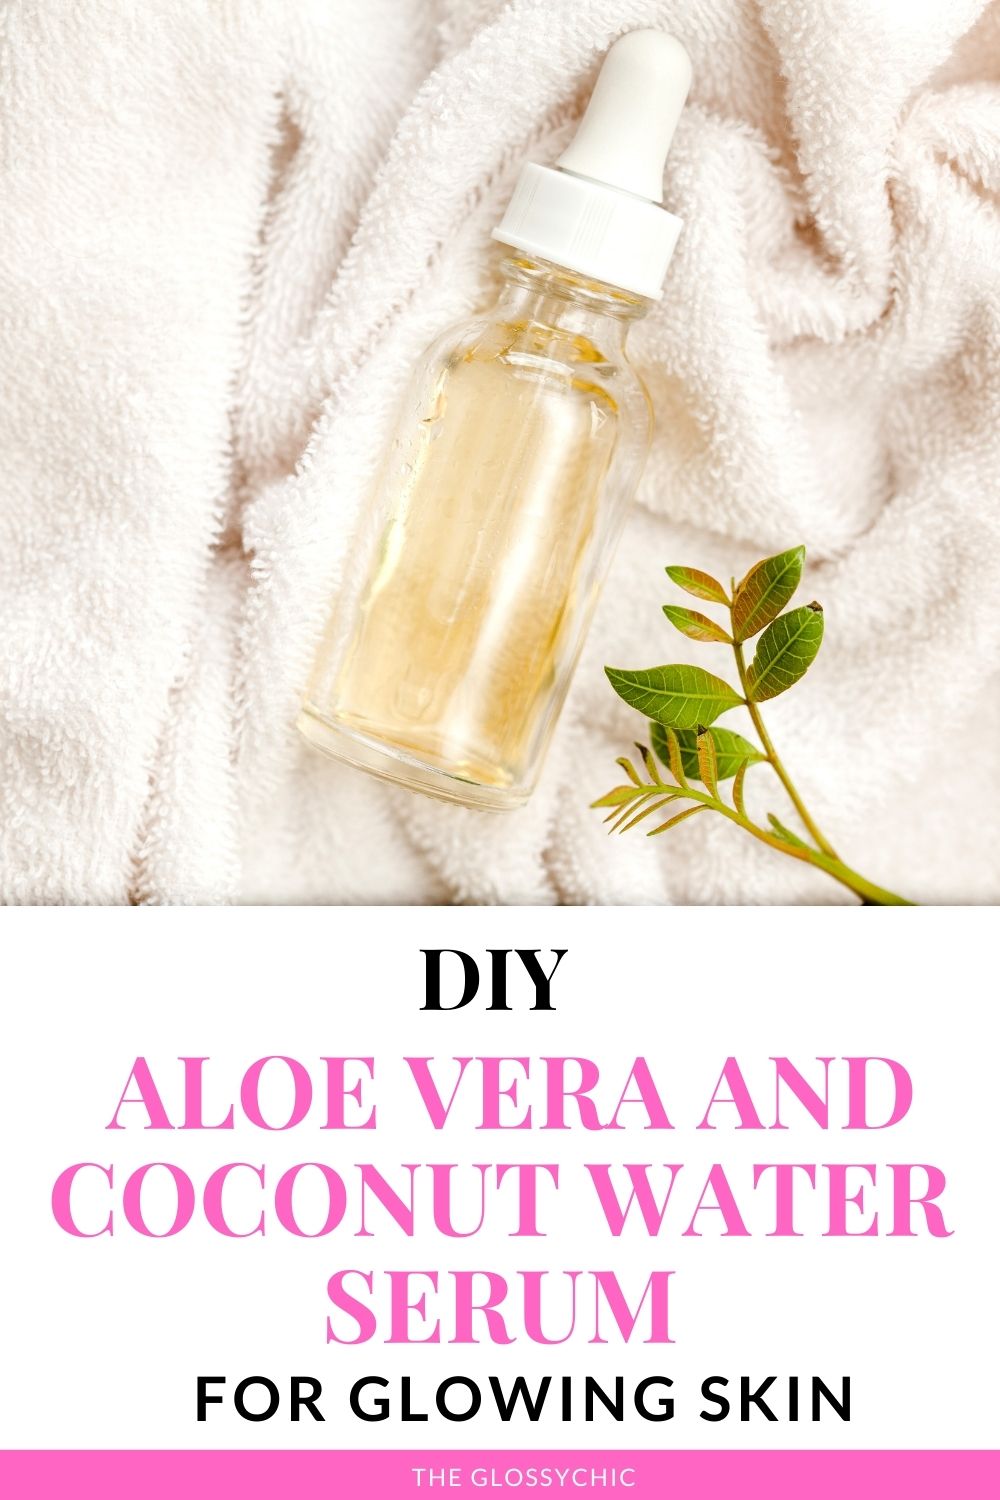 DIY aloe vera gel and coconut water serum